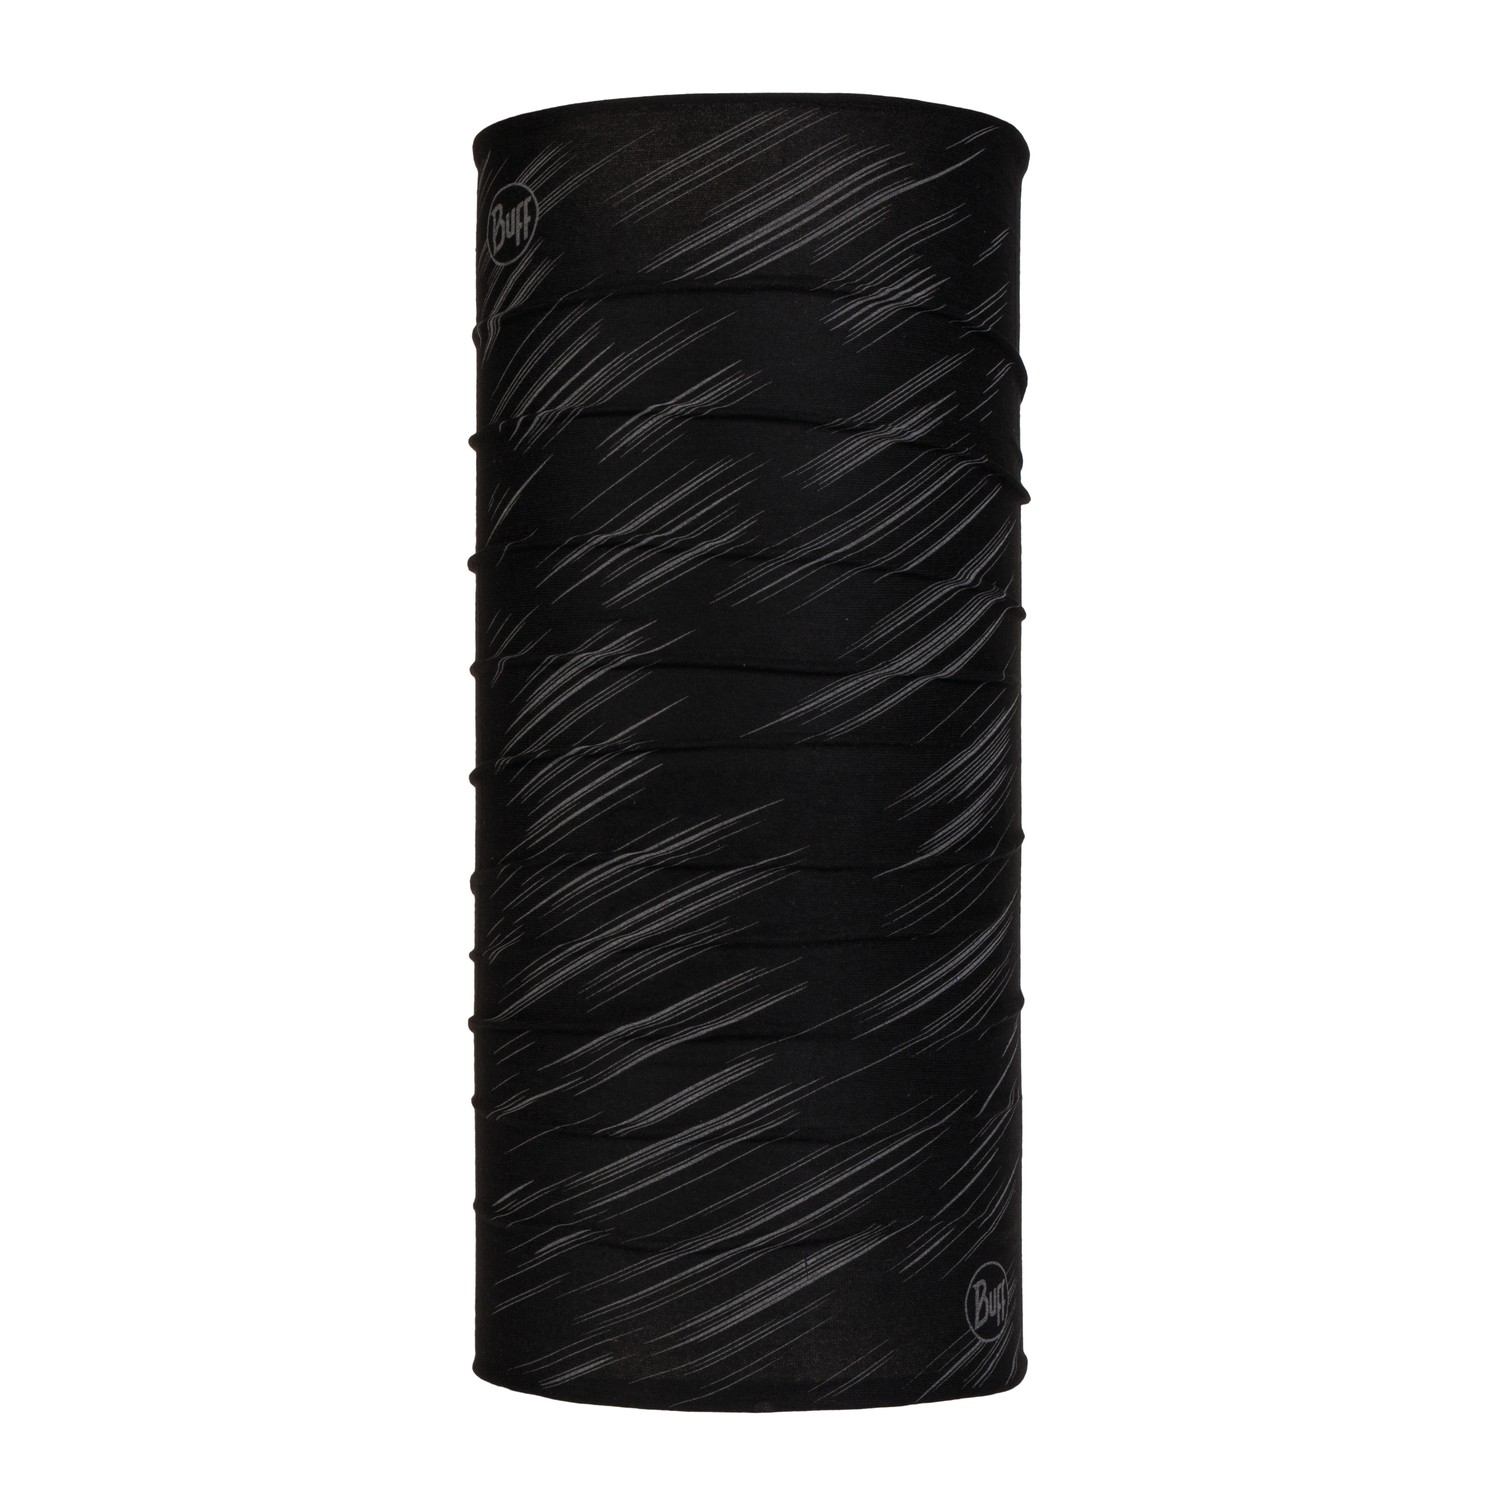 Buff Reflective Chauffe-nuque - R Solid Black